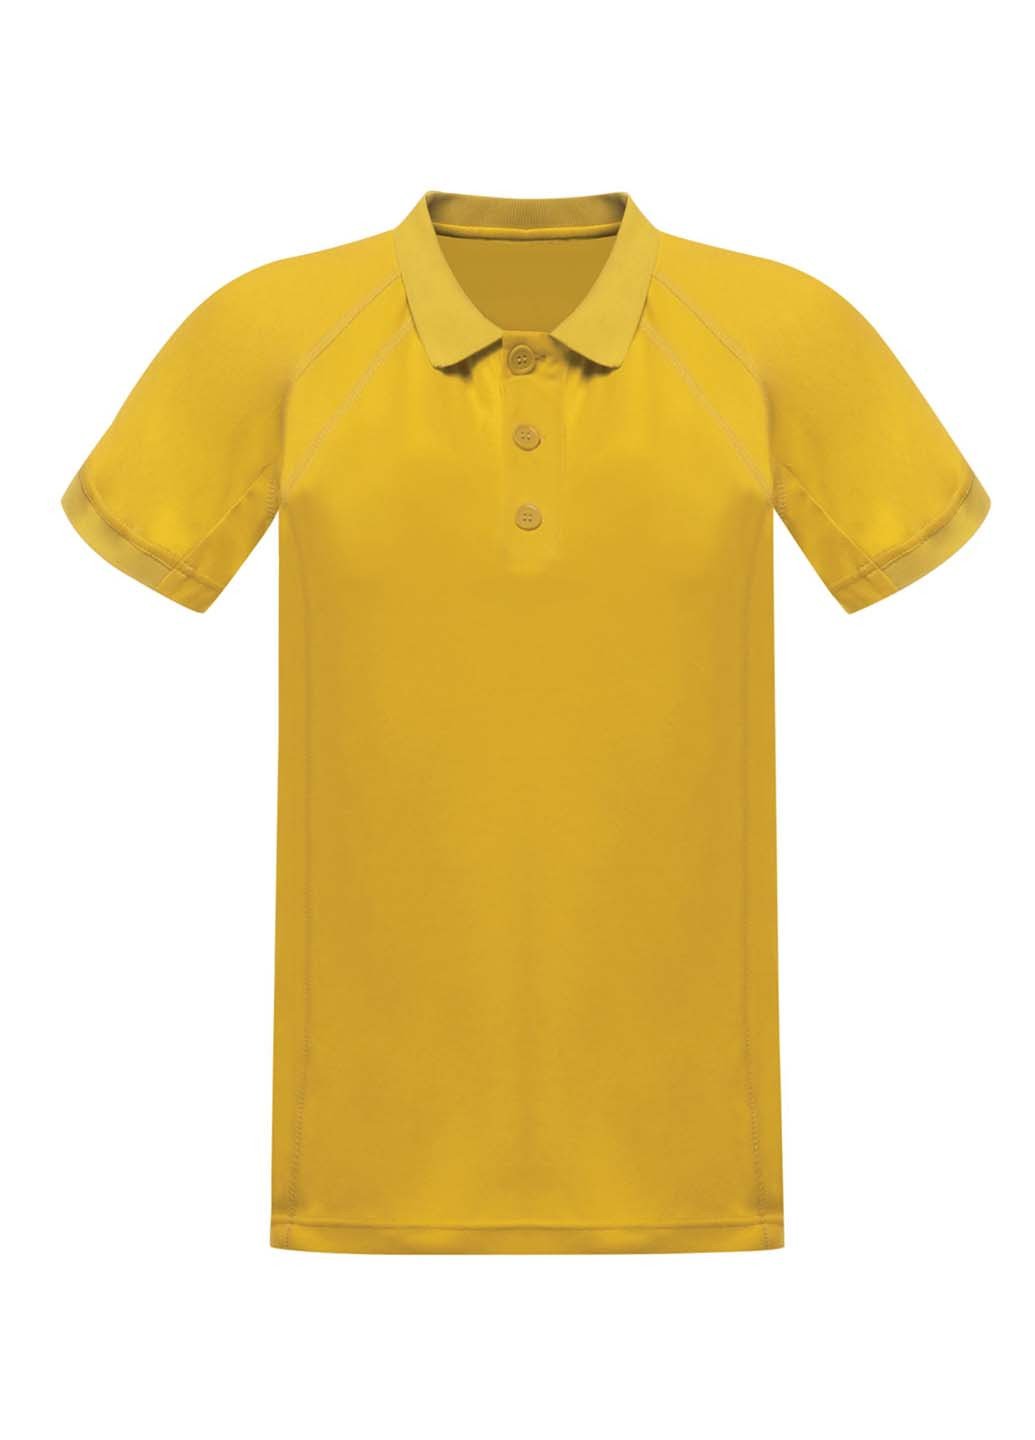 Желтая футболка-поло для мужчин Regatta однотонная